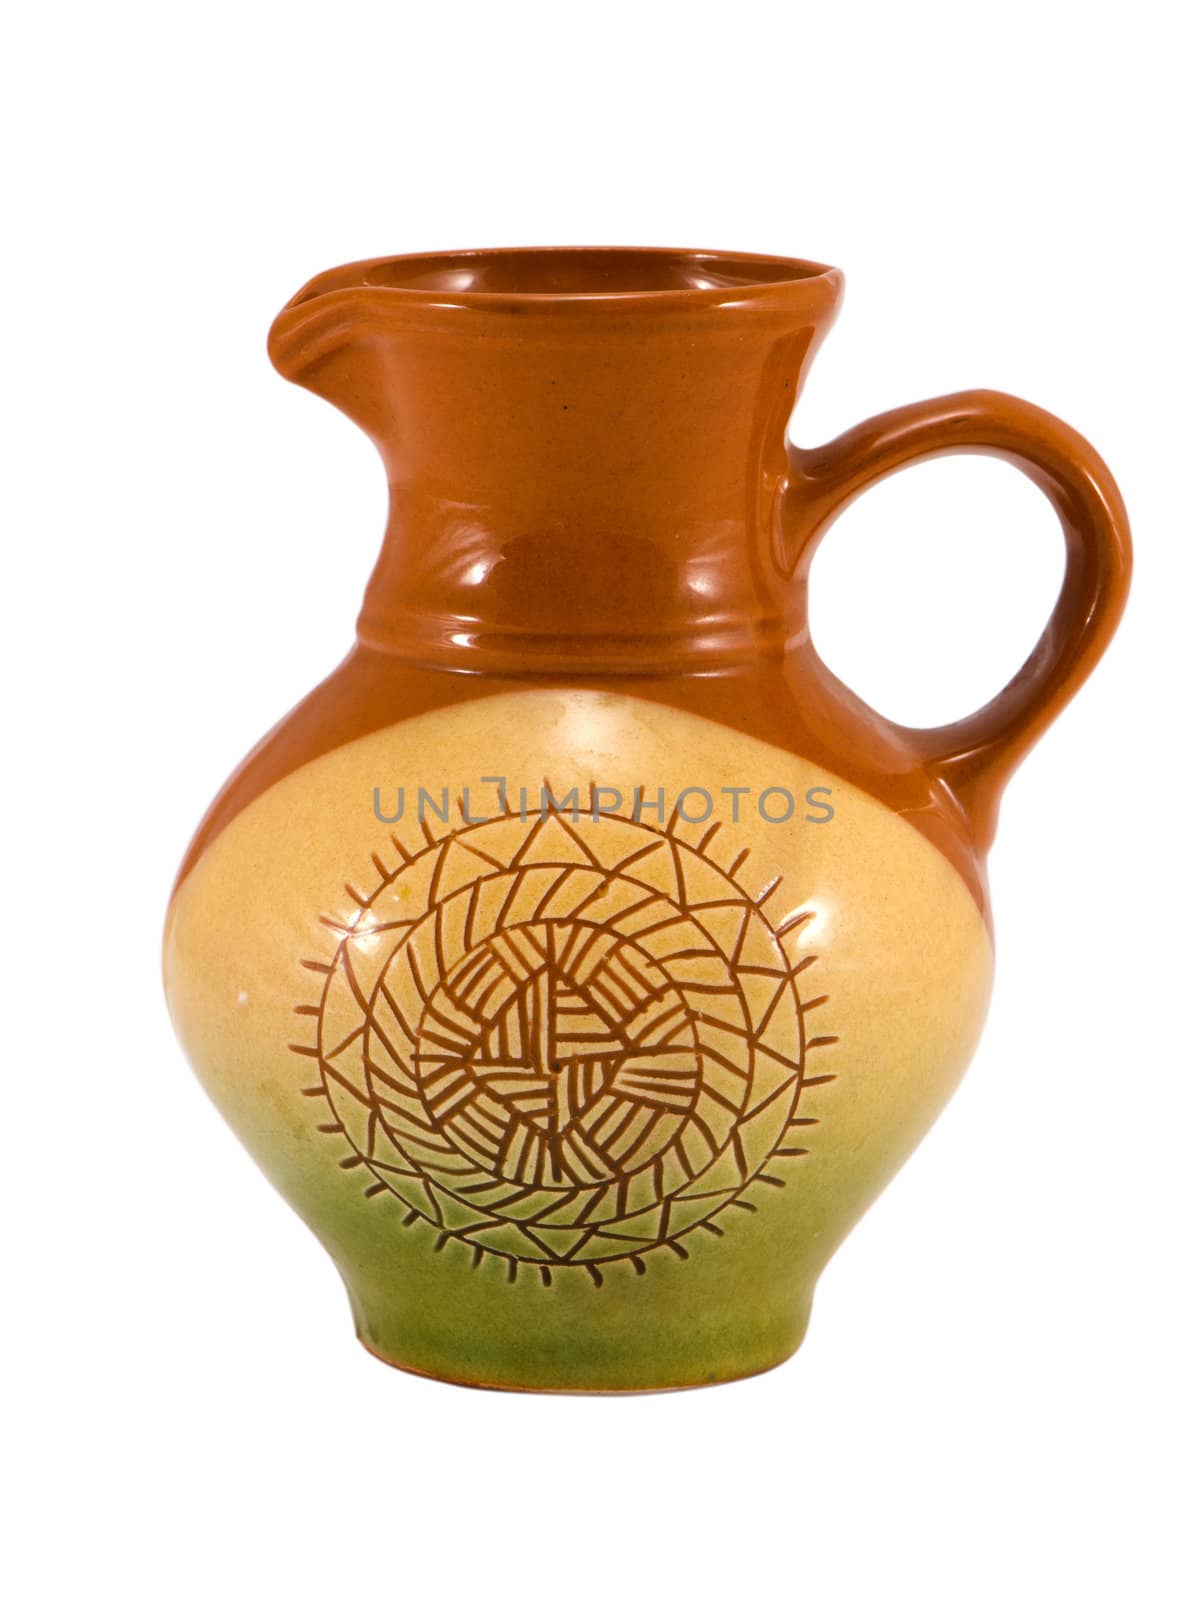 retro craft handmade clay jug pitcher on white by sauletas